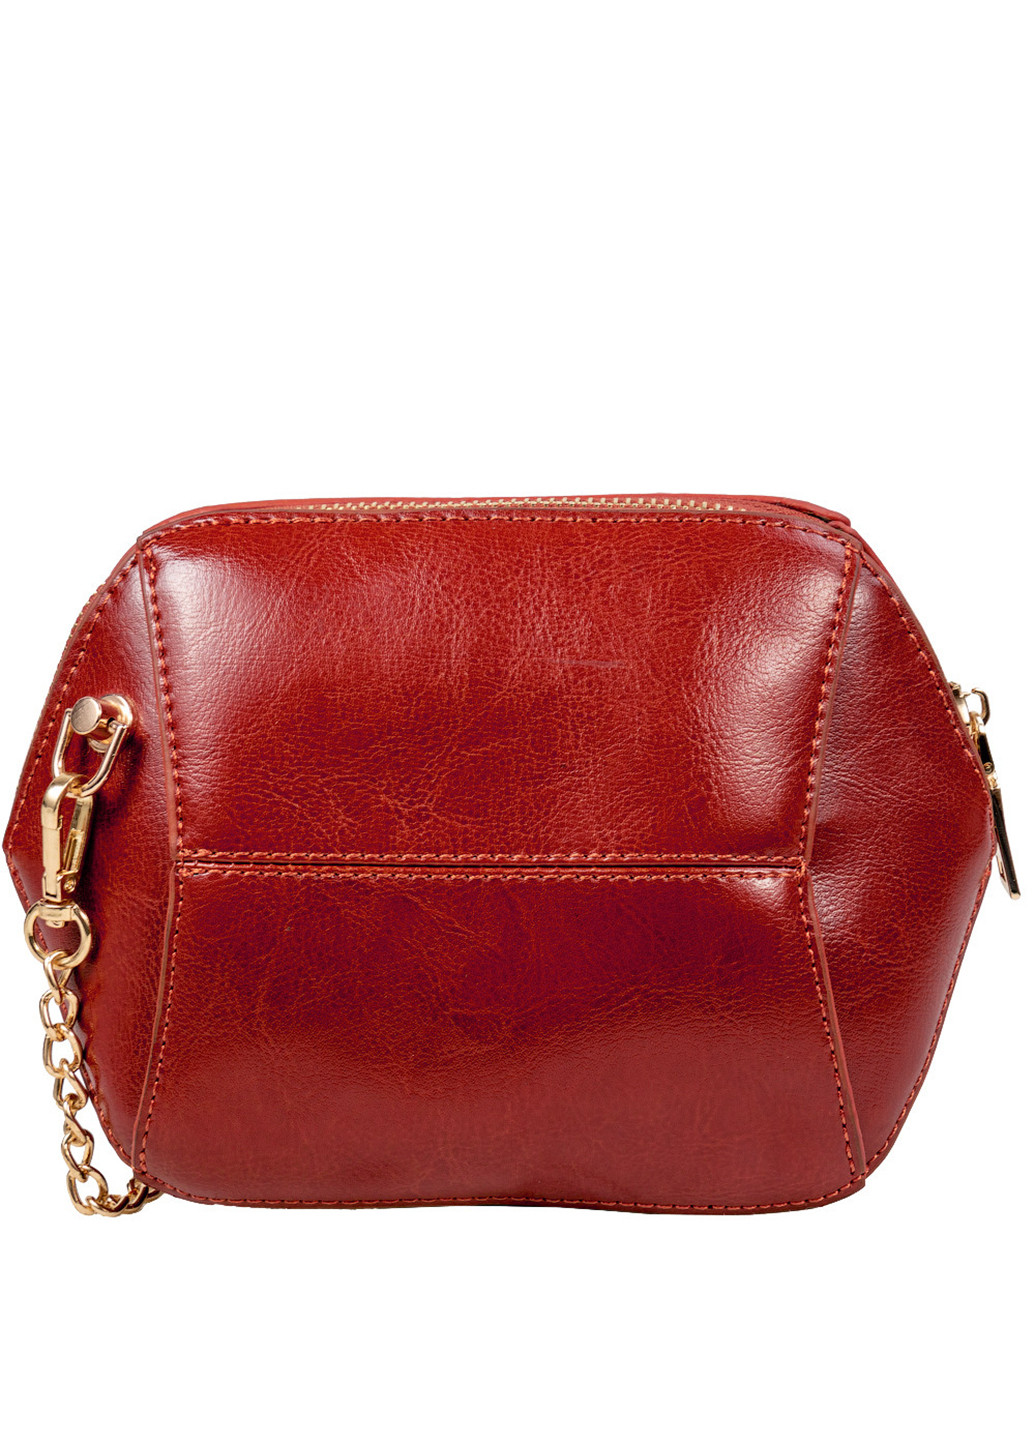 Женская кожаная сумка-клатч 16х14,5х7 см Eterno (252130701)